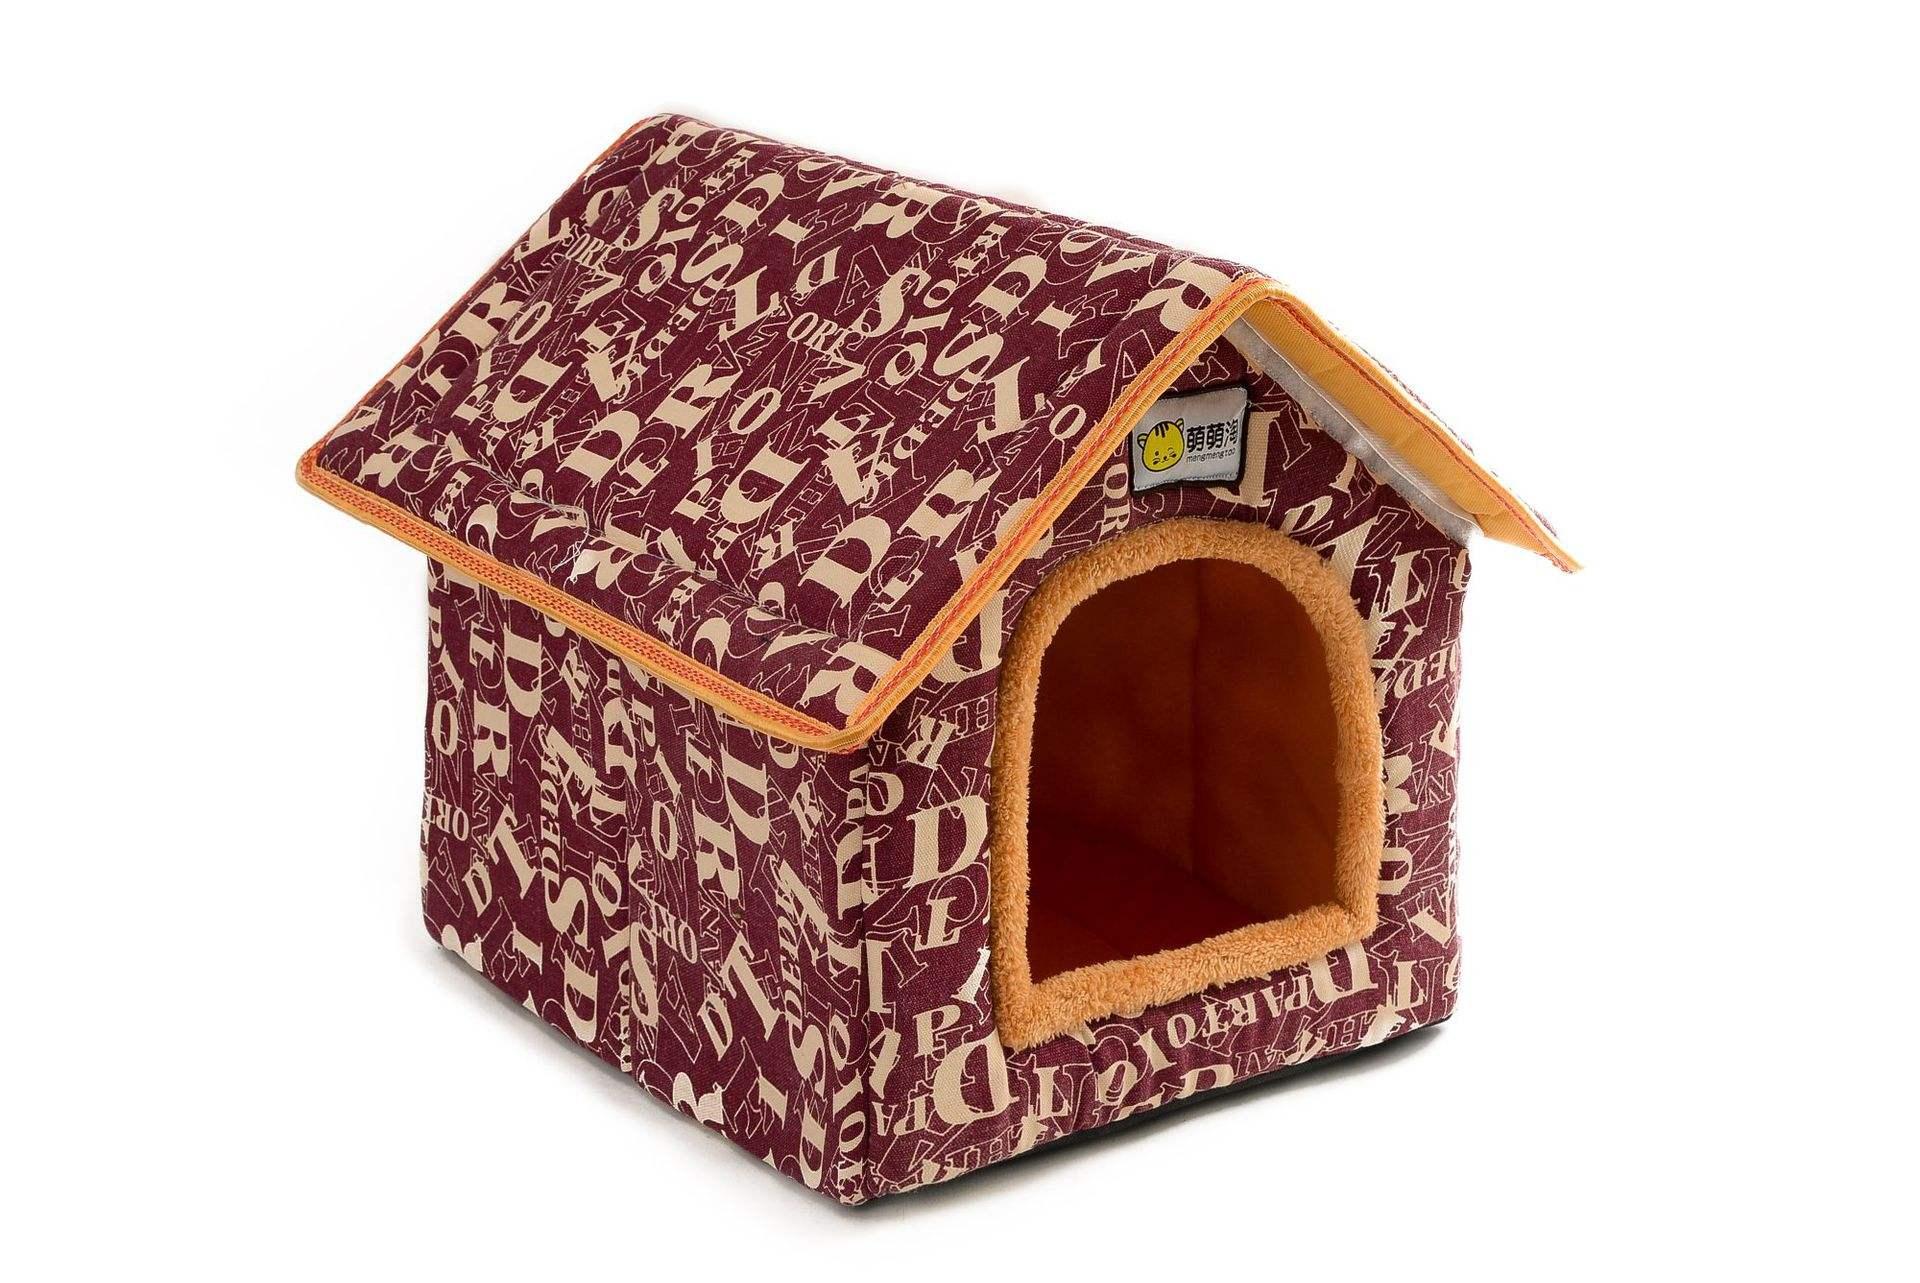 Wholesale Underground Cheap Fabric Indoor Warm Pet Dog House